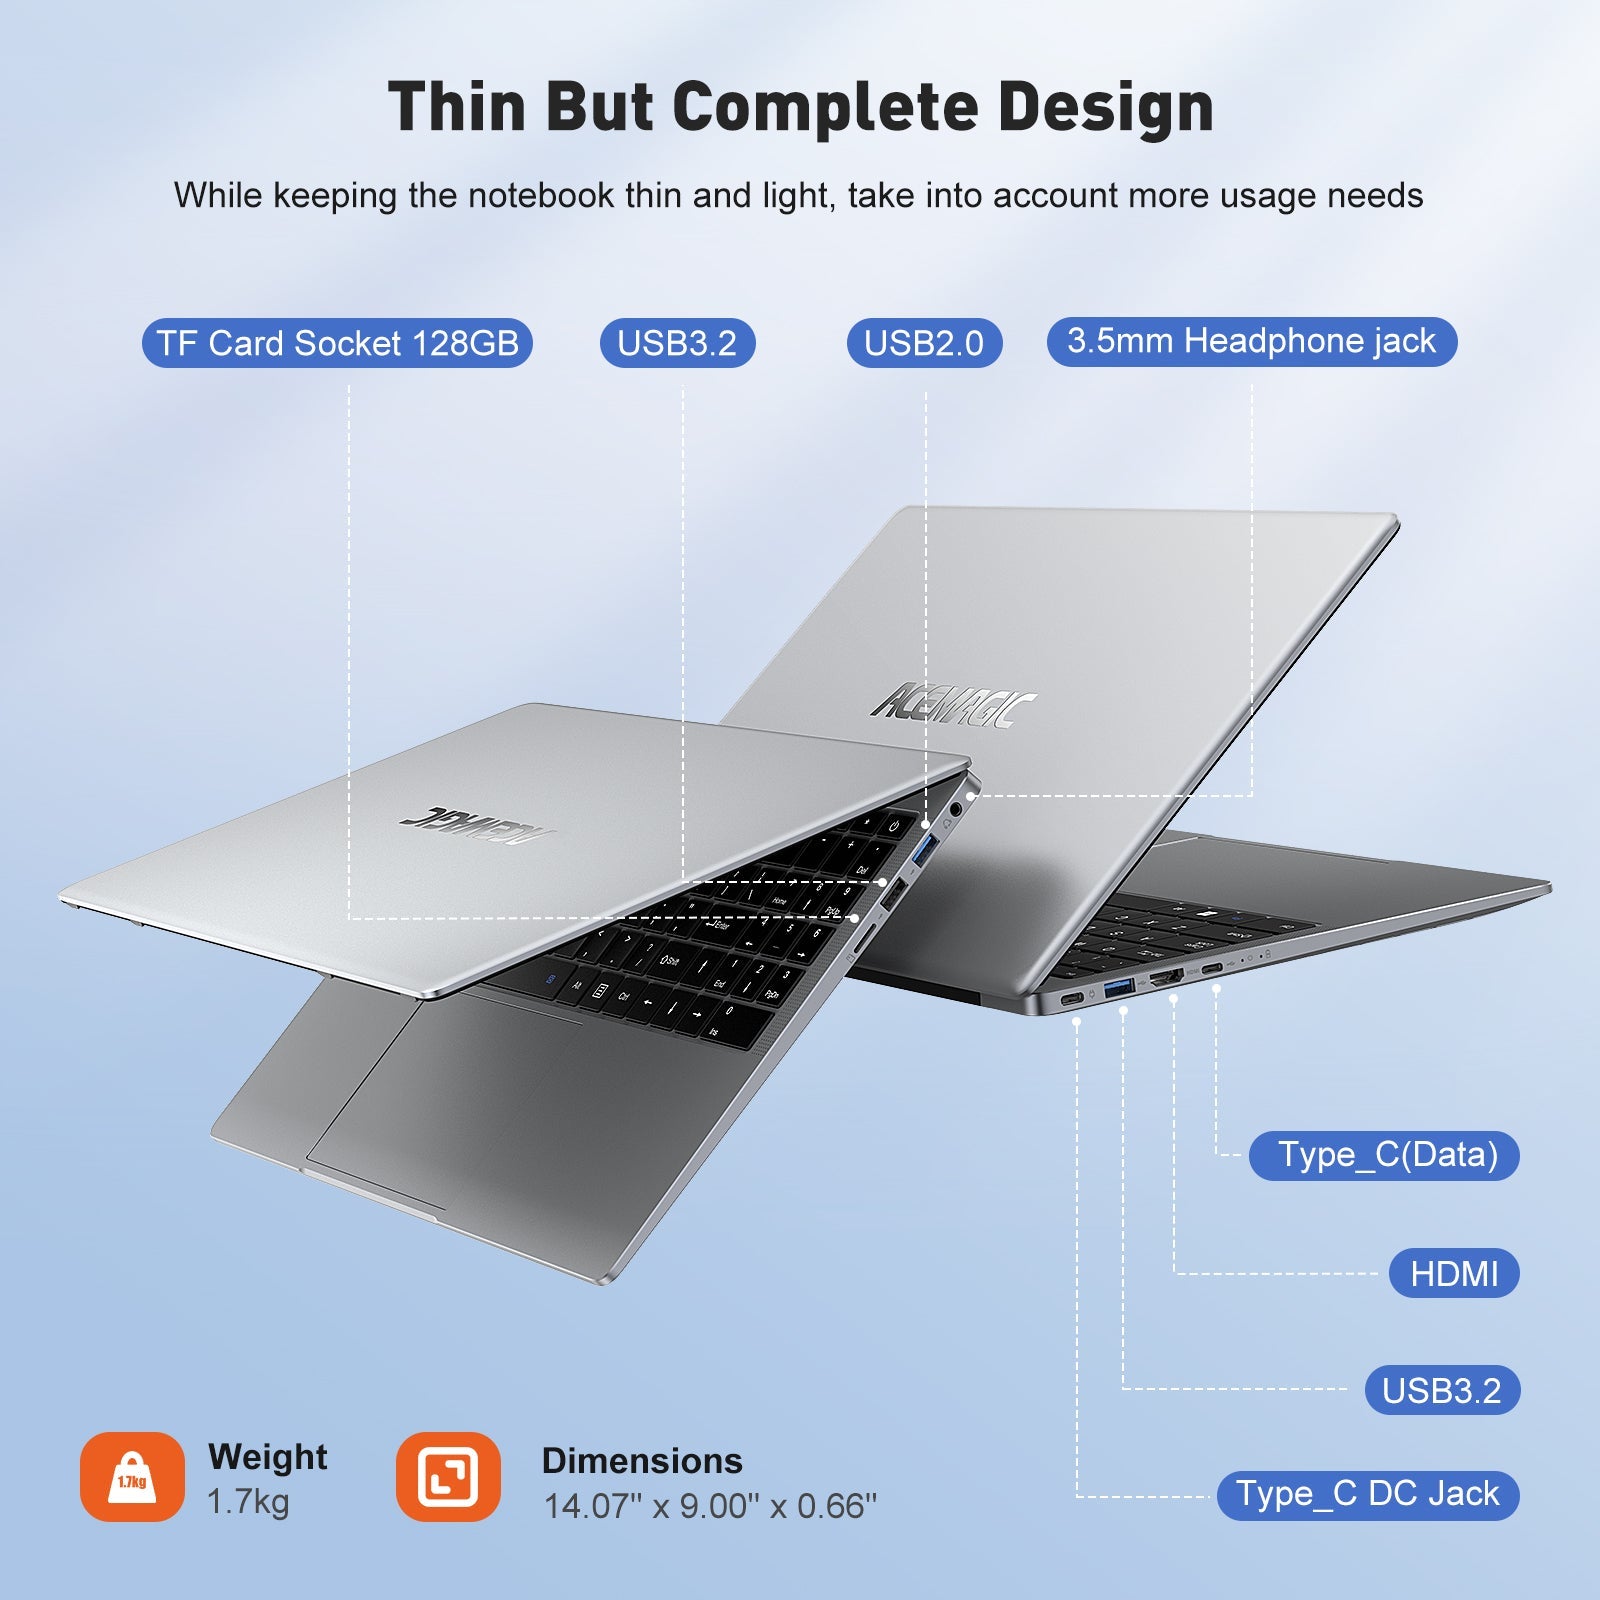 Acemagic ‎ AX15 Intel Alder Lake N95 vendita di laptop grigio + argento